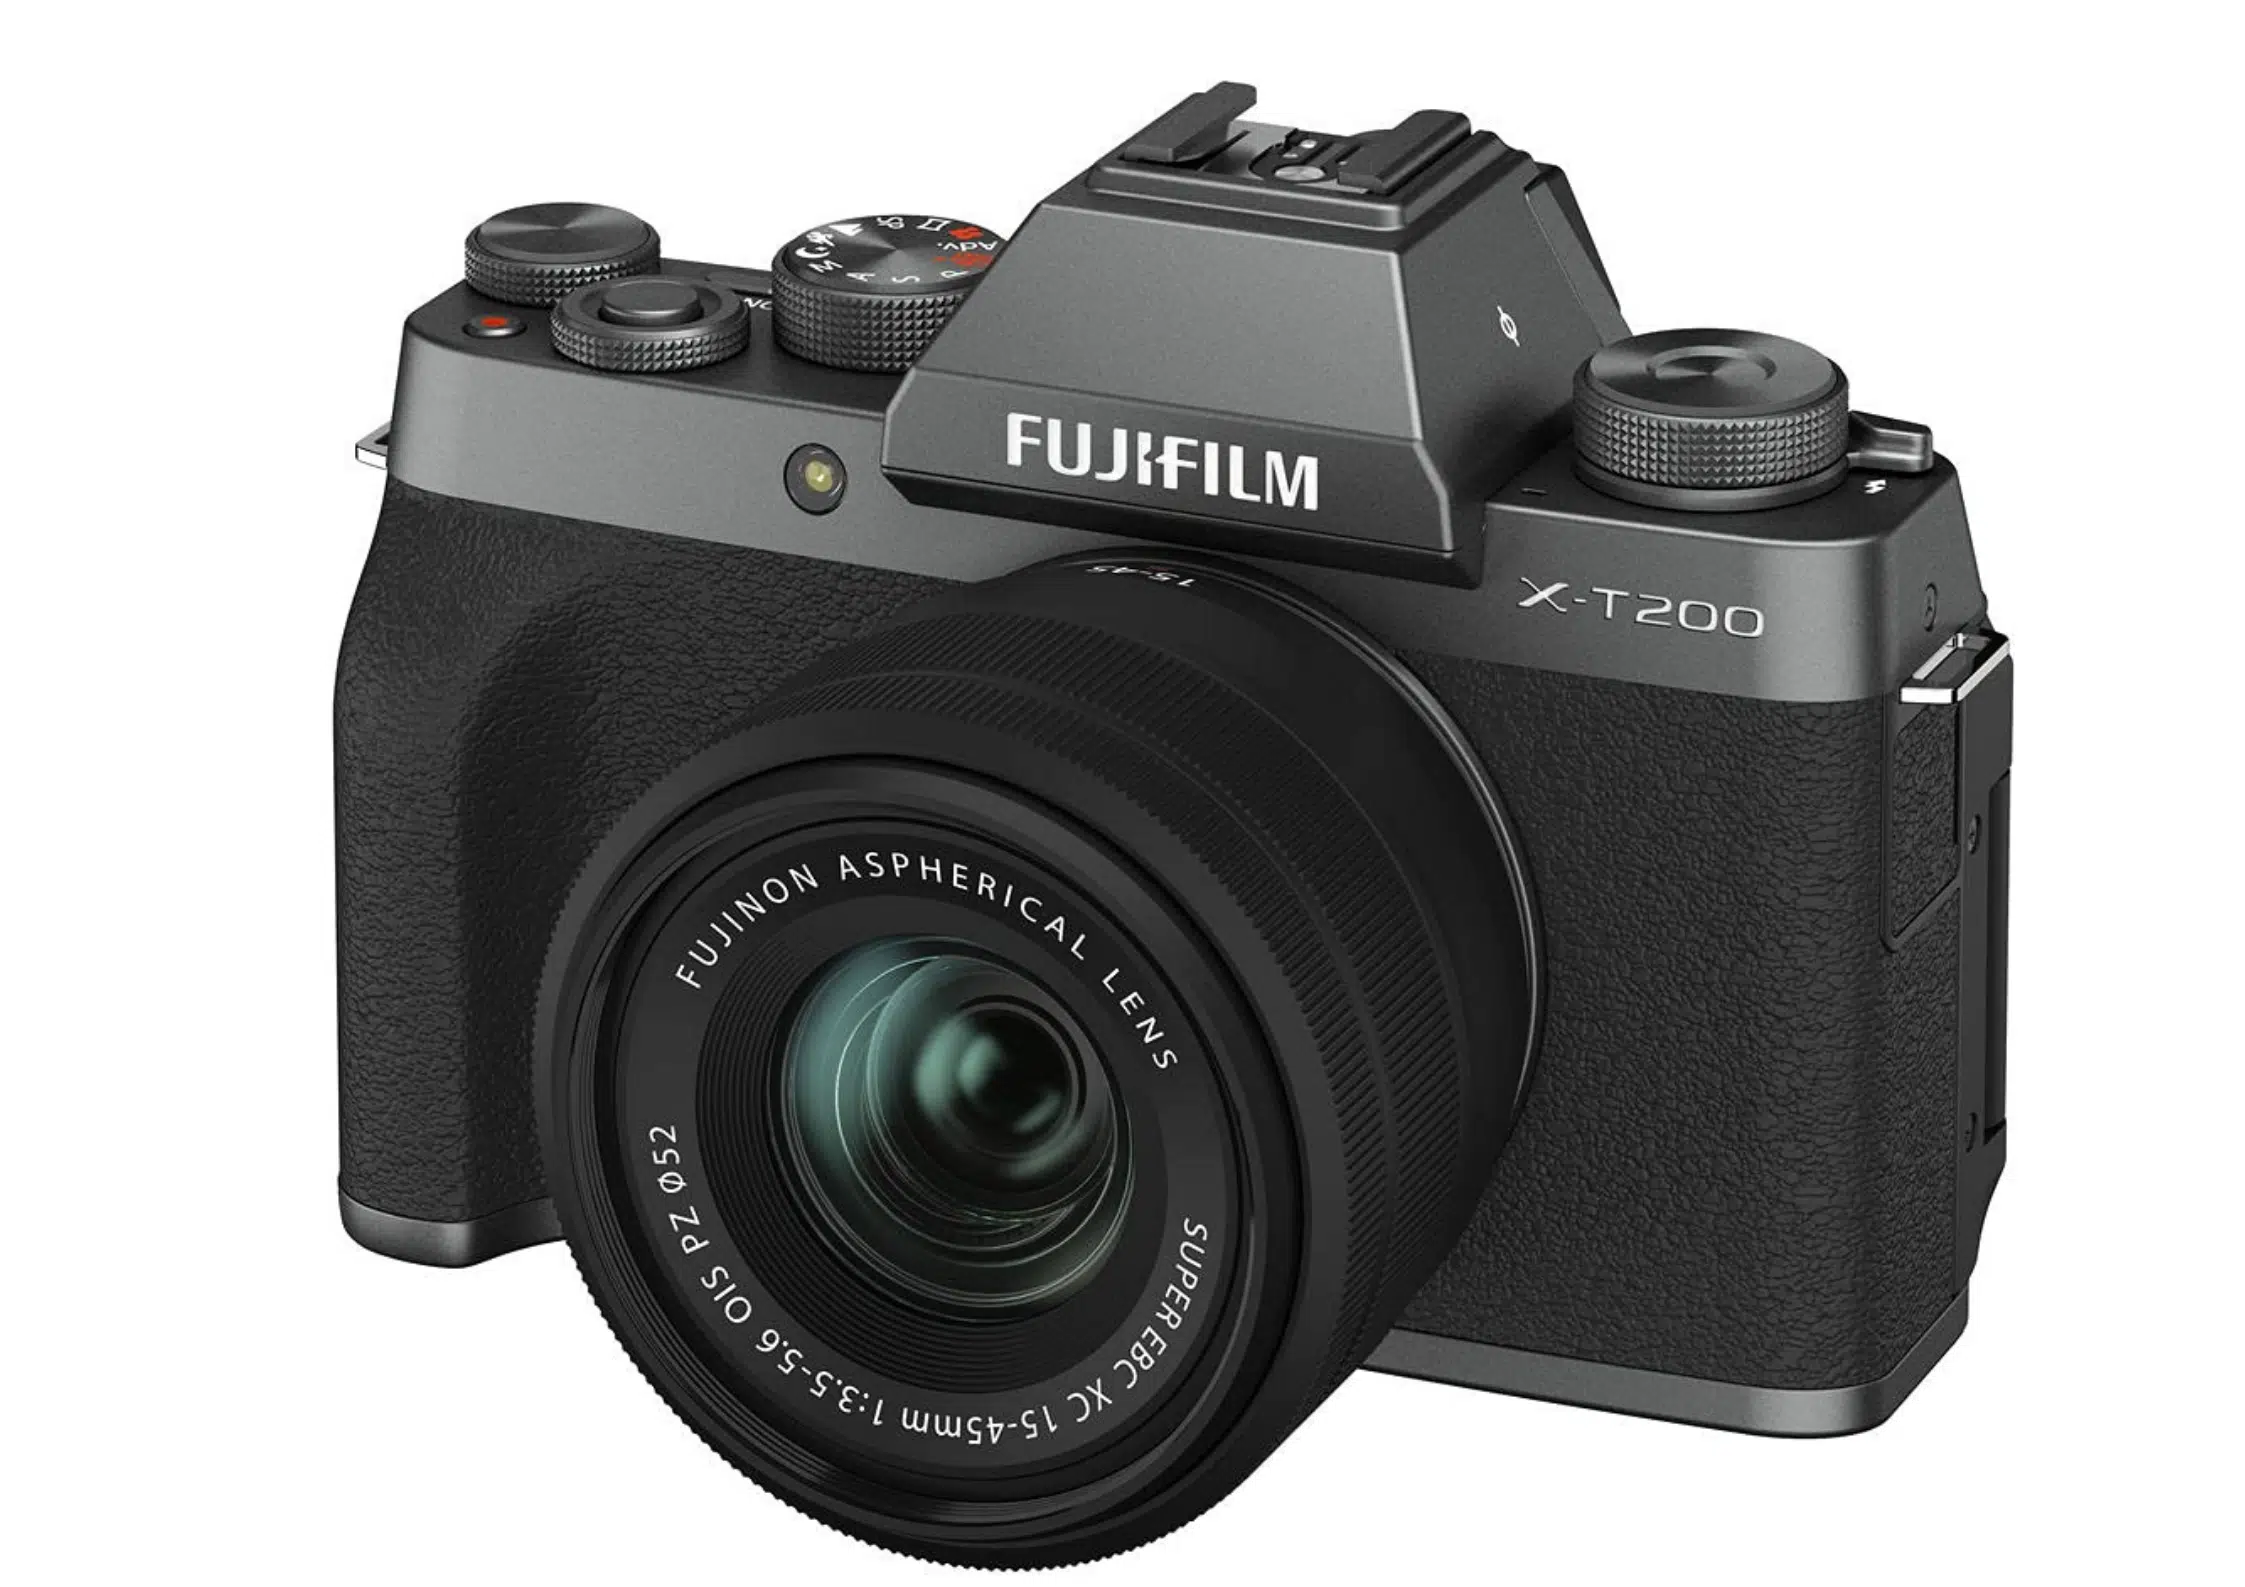 Fujifilm XT-200 - Best mirrorless camera for beginners